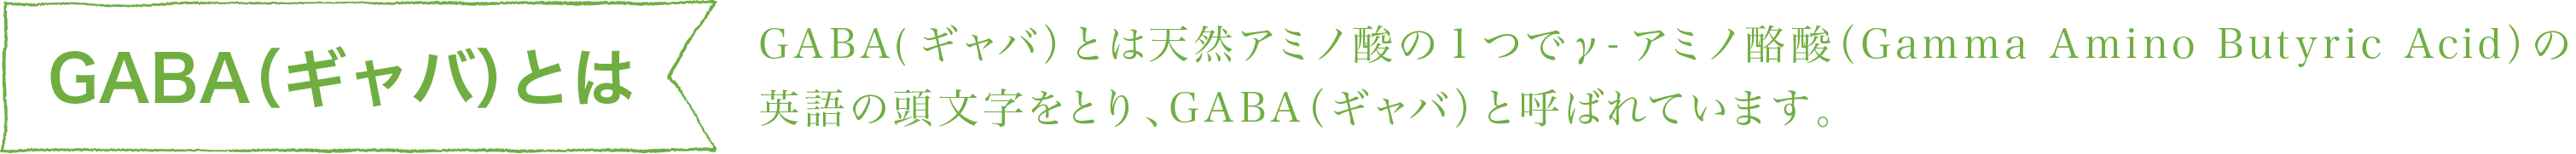 GABA（ギャバ）とは、天然アミノ酸の一つでγ-アミノ酪酸(Gamma Amino Butyric Acid)の英語の頭文字をとりGABA(ギャバ)と呼ばれています。 